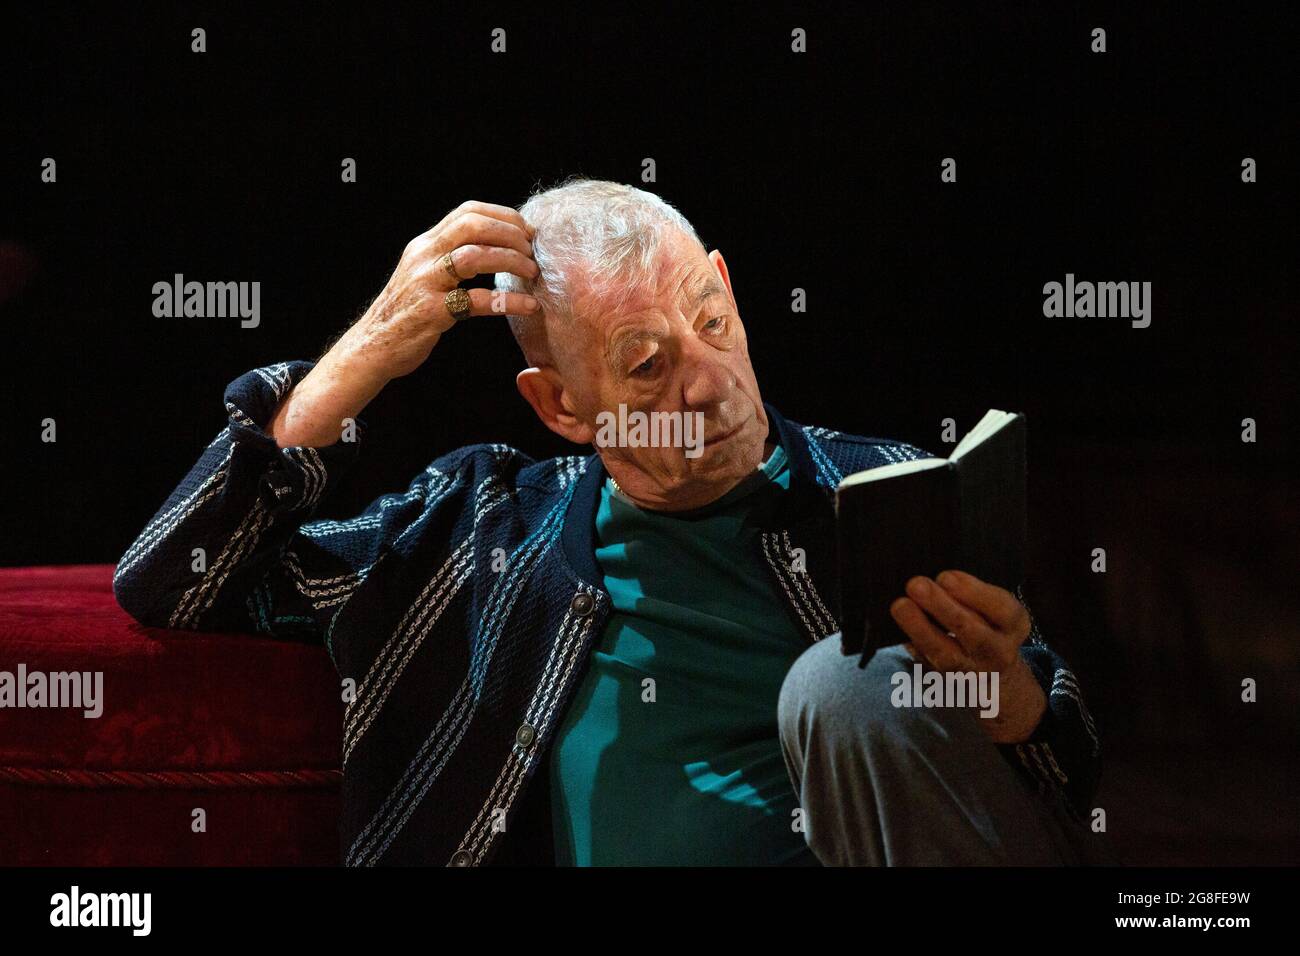 Ian McKellen as Hamlet in HAMLET by Shakespeare opening at the Theatre Royal Windsor, England on 20/07/2021 set design: Lee Newby  costumes: Loren Epstein  wigs & make-up: Susanna Peretz  lighting: Zoe Spurr  director: Sean Mathias Stock Photo